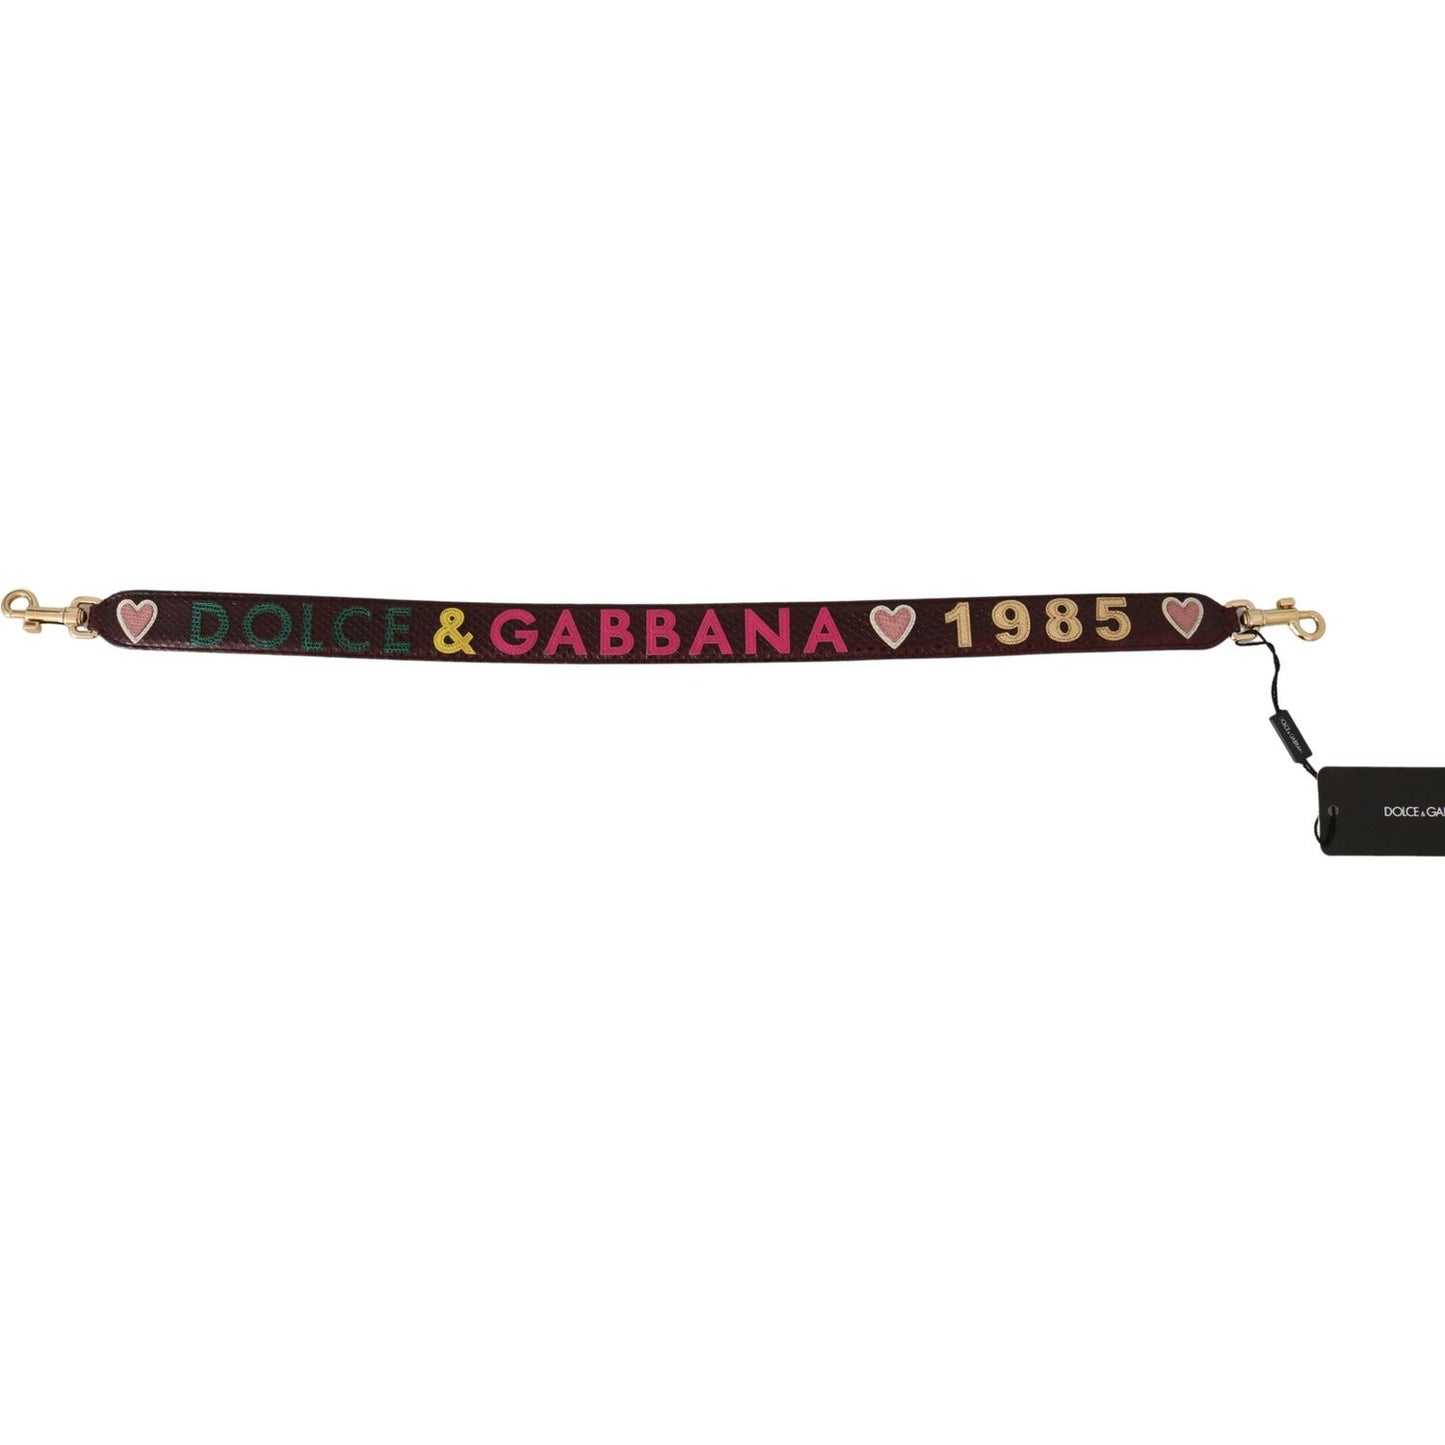 Dolce & Gabbana Exquisite Bordeaux Shoulder Strap Accessory bordeaux-exotic-skin-leather-belt-shoulder-strap Handbags, Wallets & Cases IMG_1637-scaled-02ed6946-46d.jpg